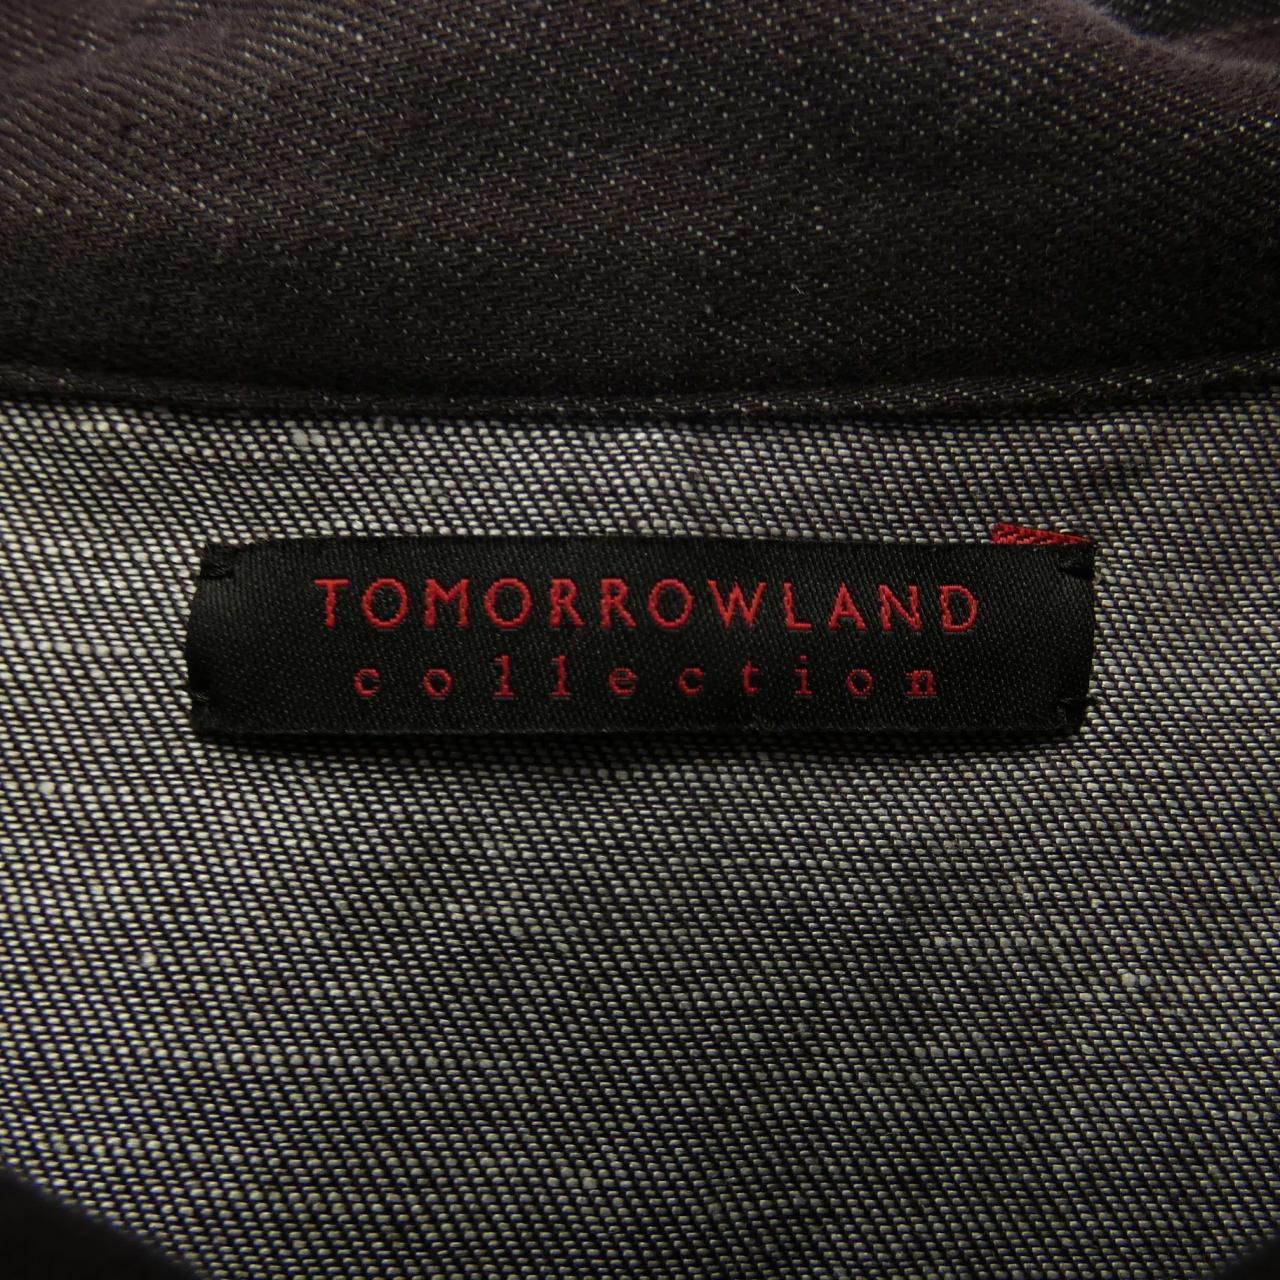 Tomorrowland TOMORROW LAND dress